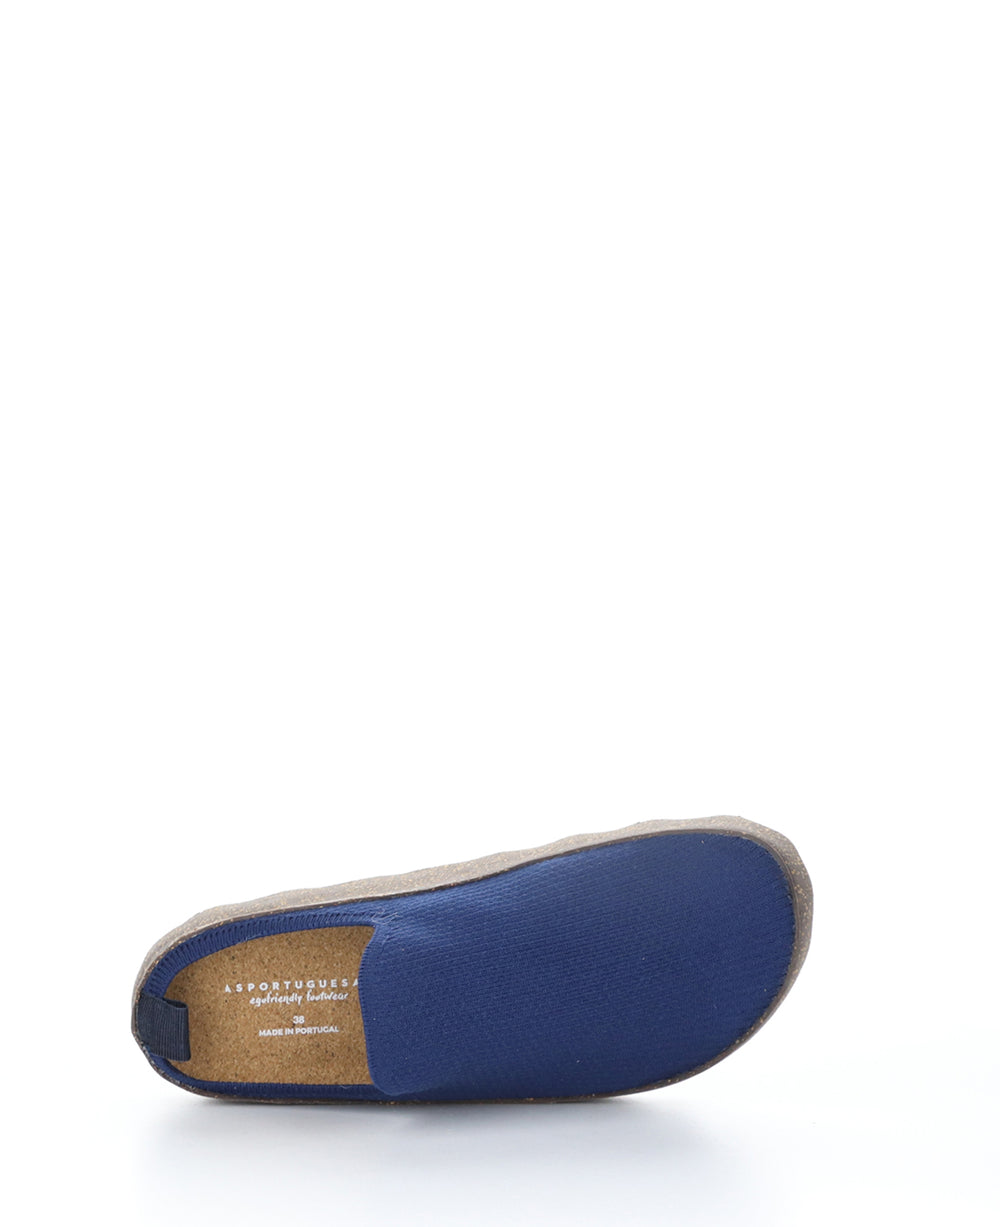 CLOG105ASPM NAVY/BROWN Slip-on Shoes|CLOG105ASPM Chaussures à Bout Rond in Bleu